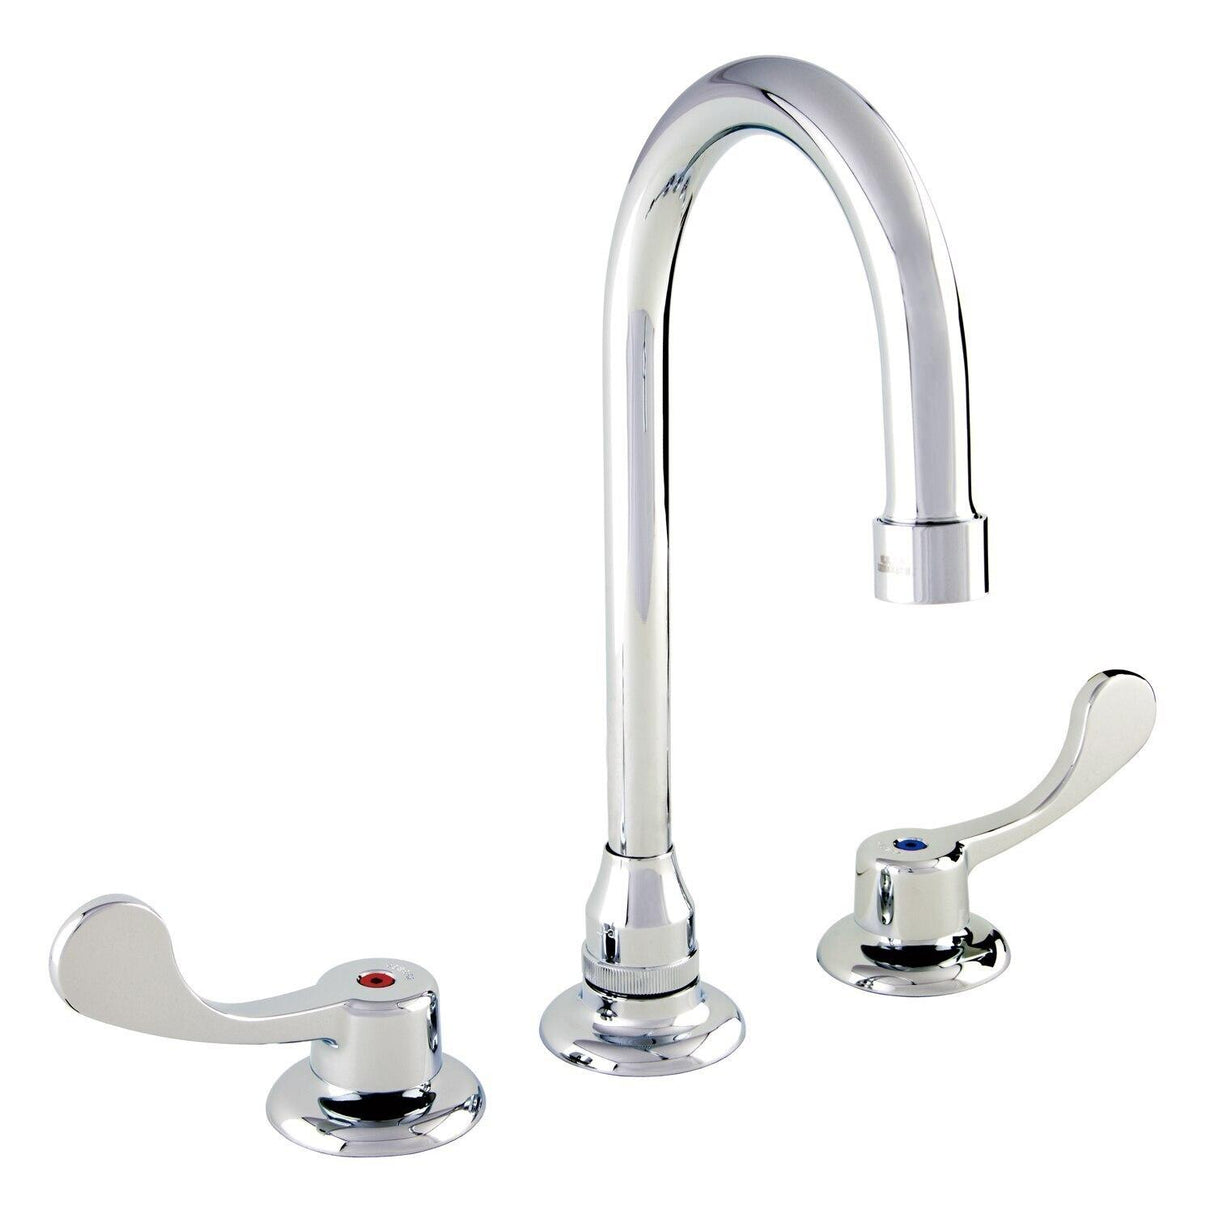 Gerber GC044105 Chrome Commercial Two Handle Widespread Lavatory Faucet W/ Wrist BL...